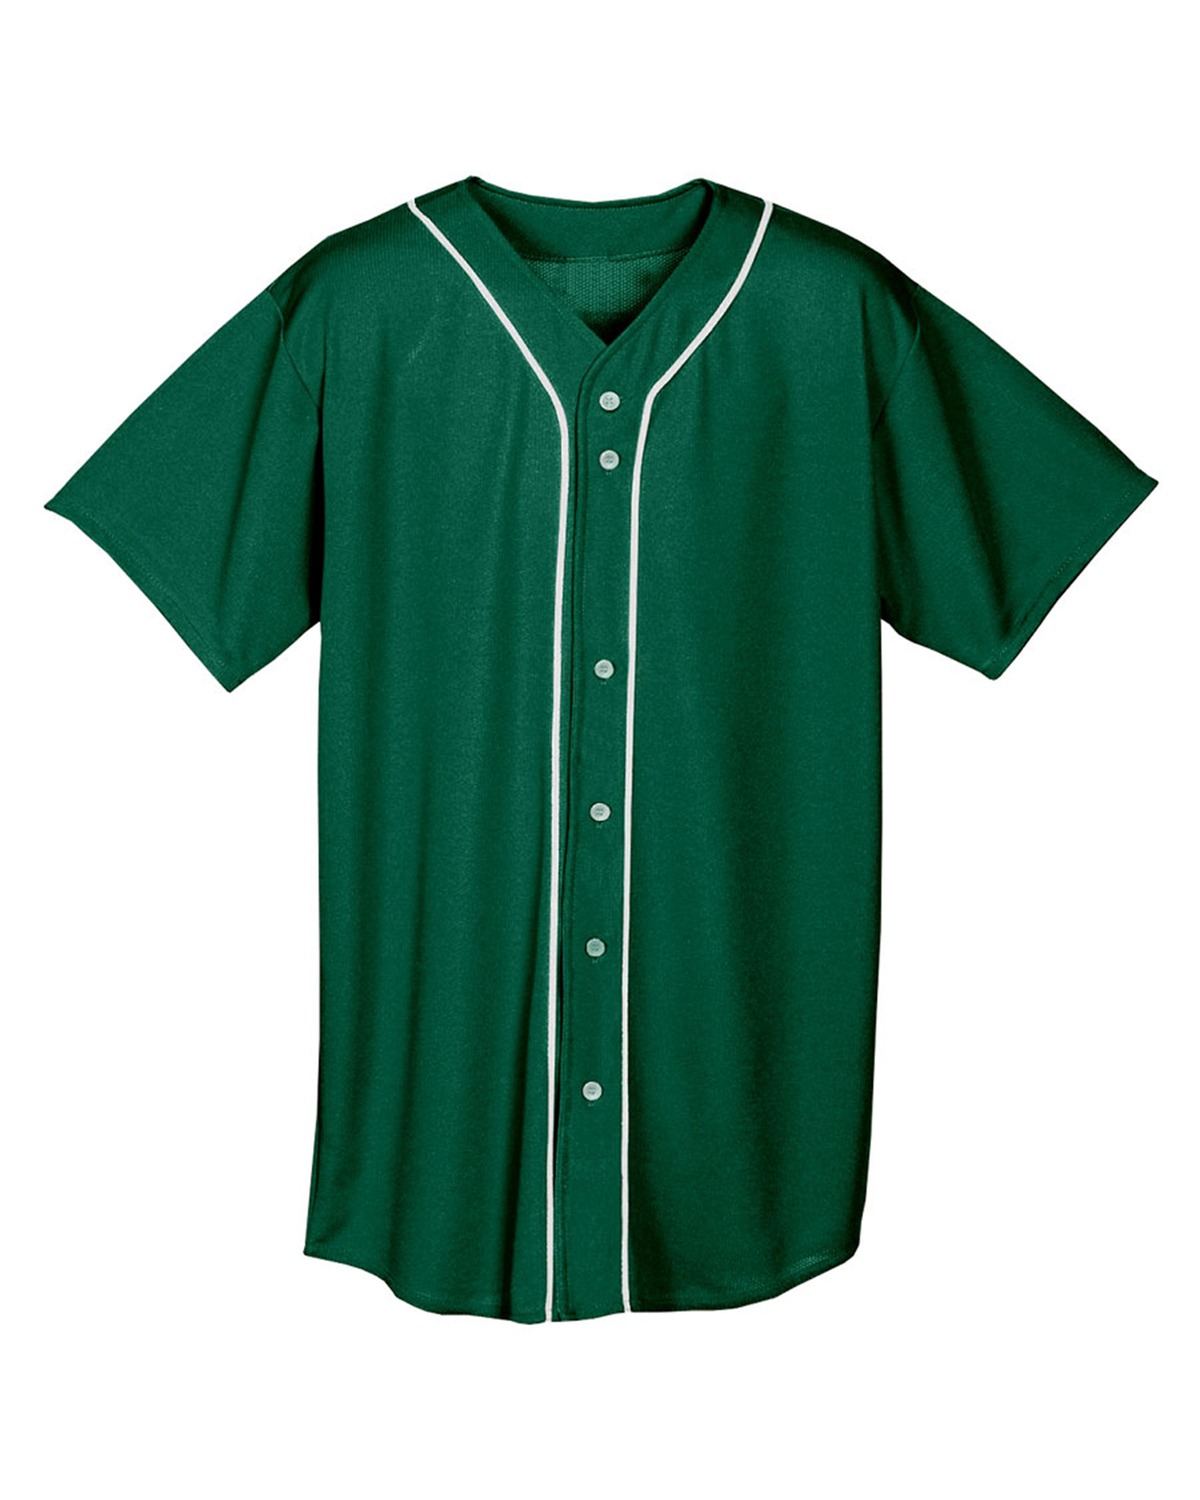 NB4184 A4 Youth Short Sleeve Full Button Baseball Jersey